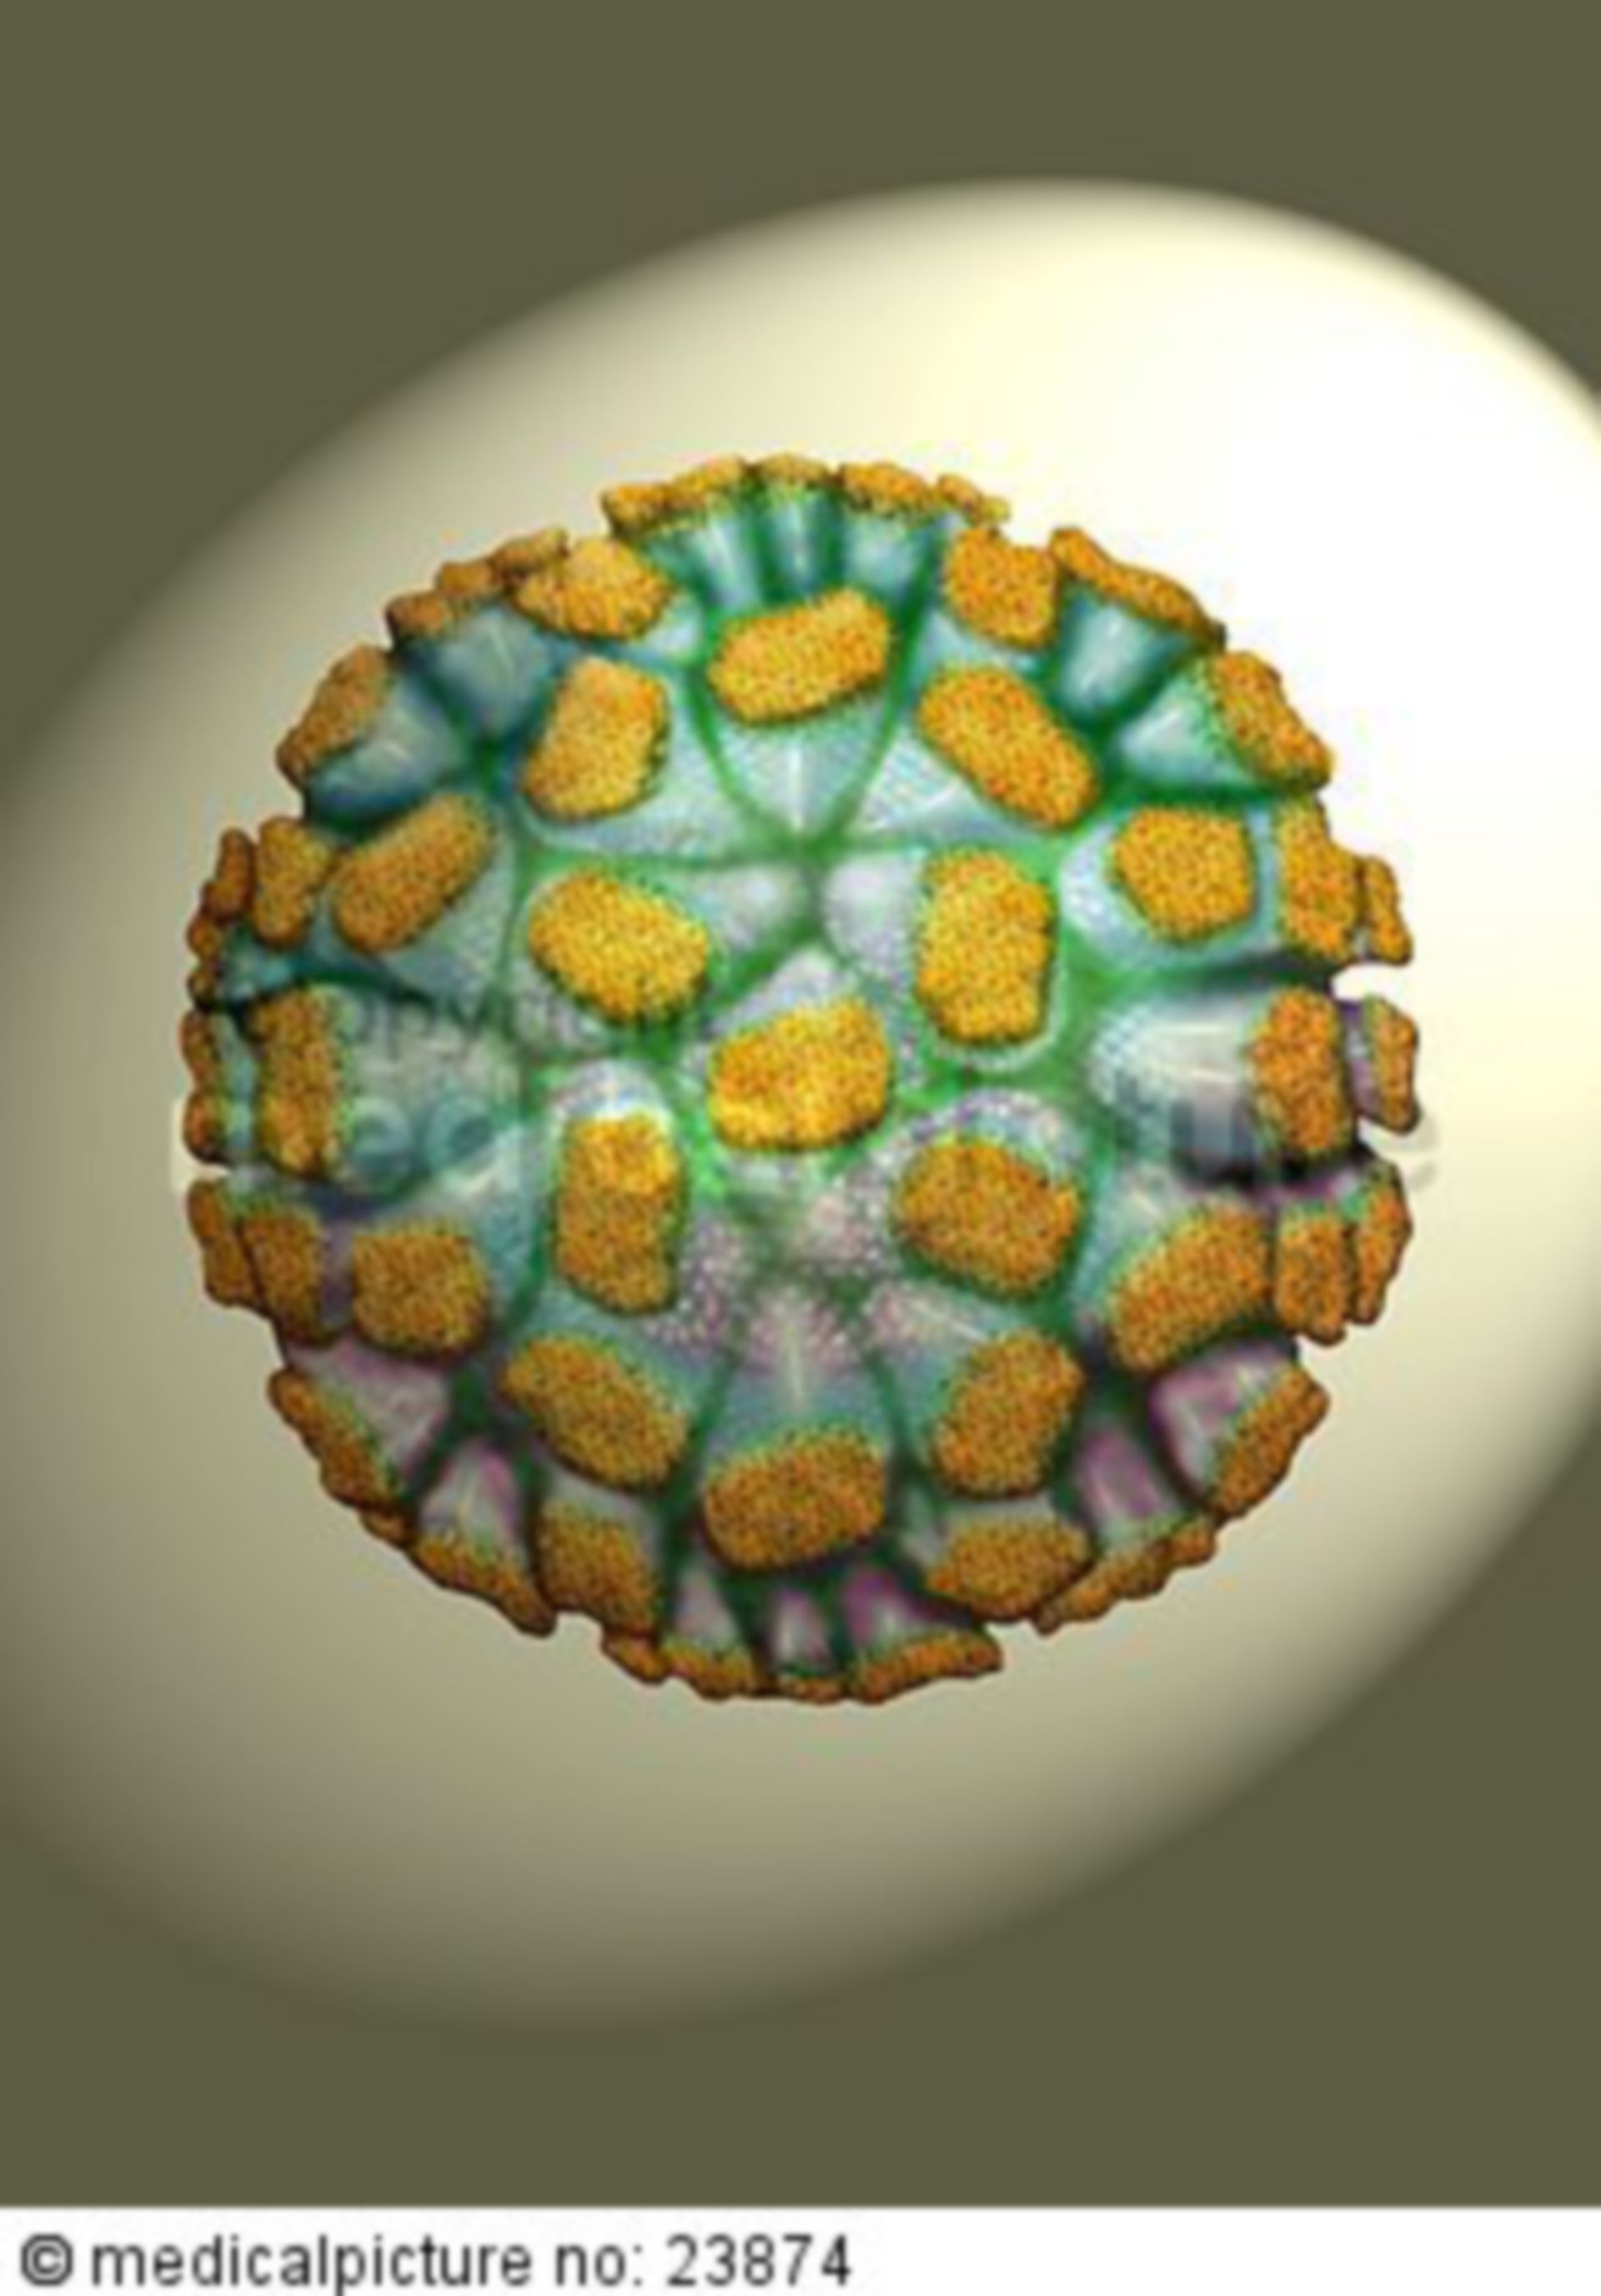  Norwalk Virus, Norovirus, Virenmodell 